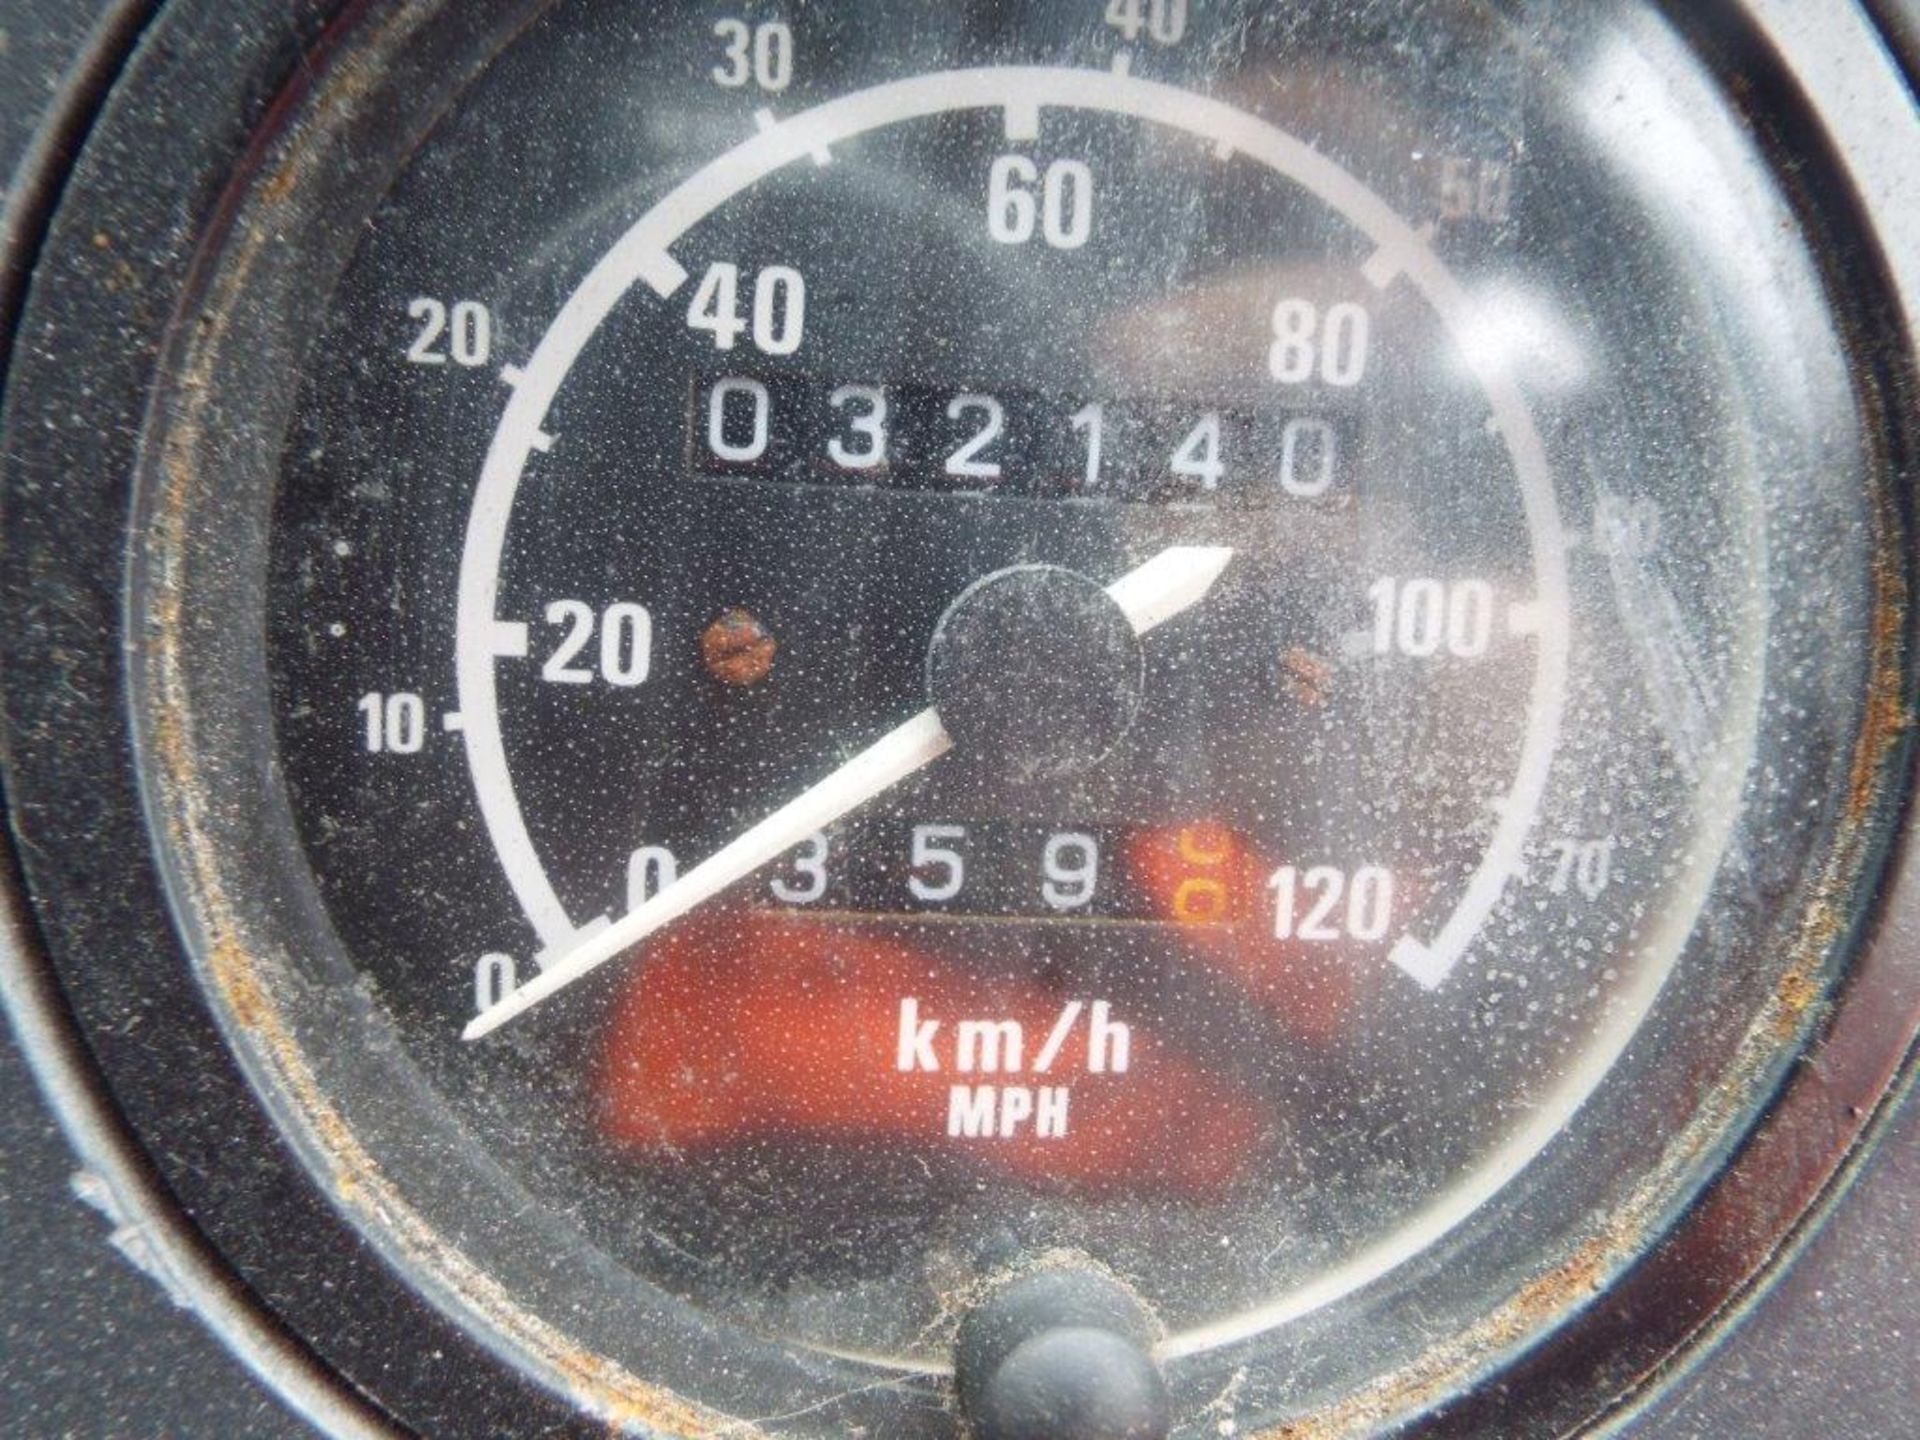 Leyland Daf 45/150 4 x 4 - Image 9 of 17